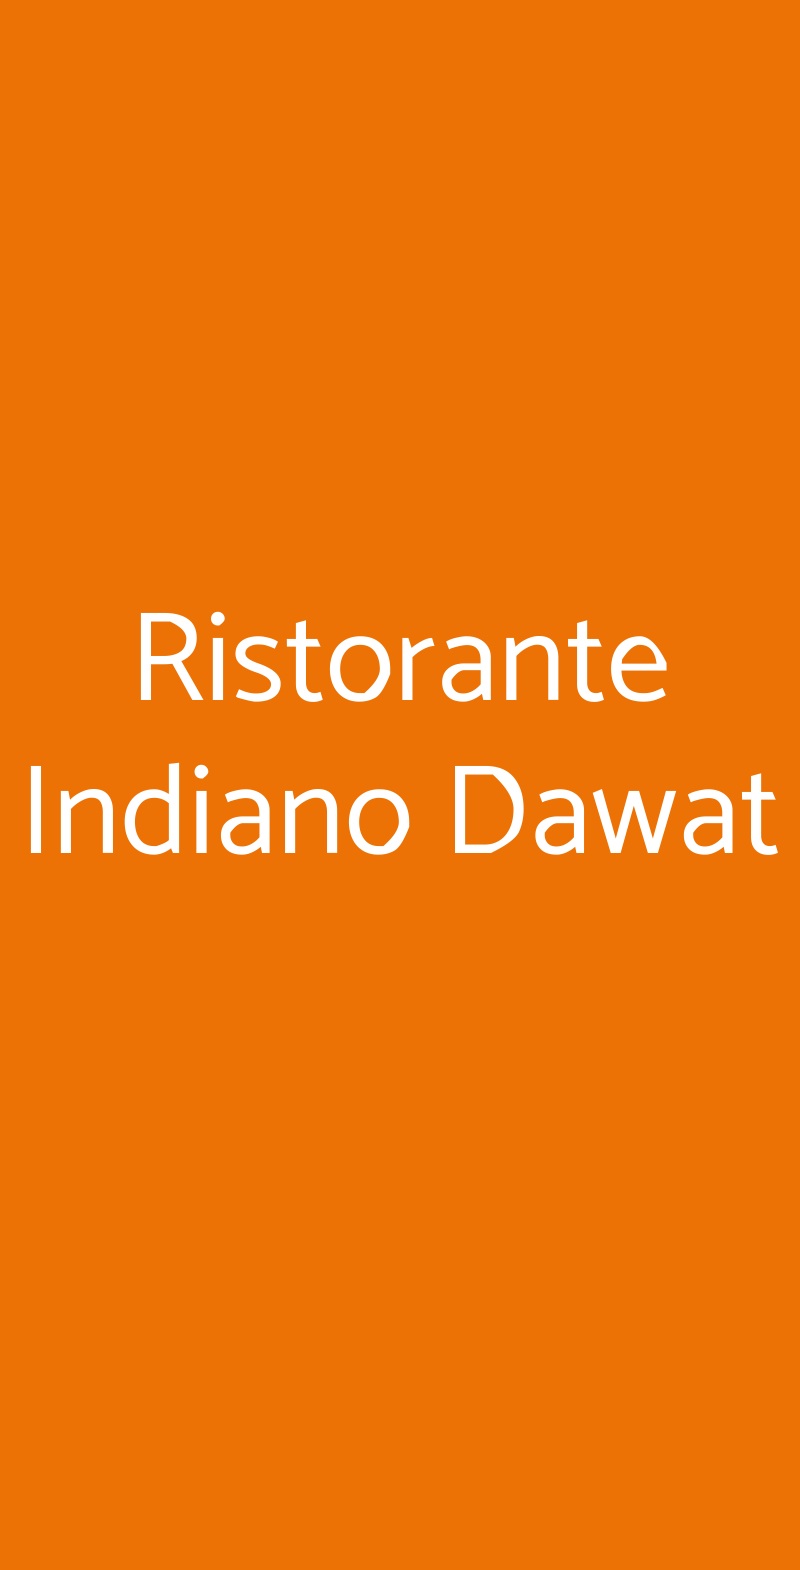 Ristorante Indiano Dawat Torino menù 1 pagina